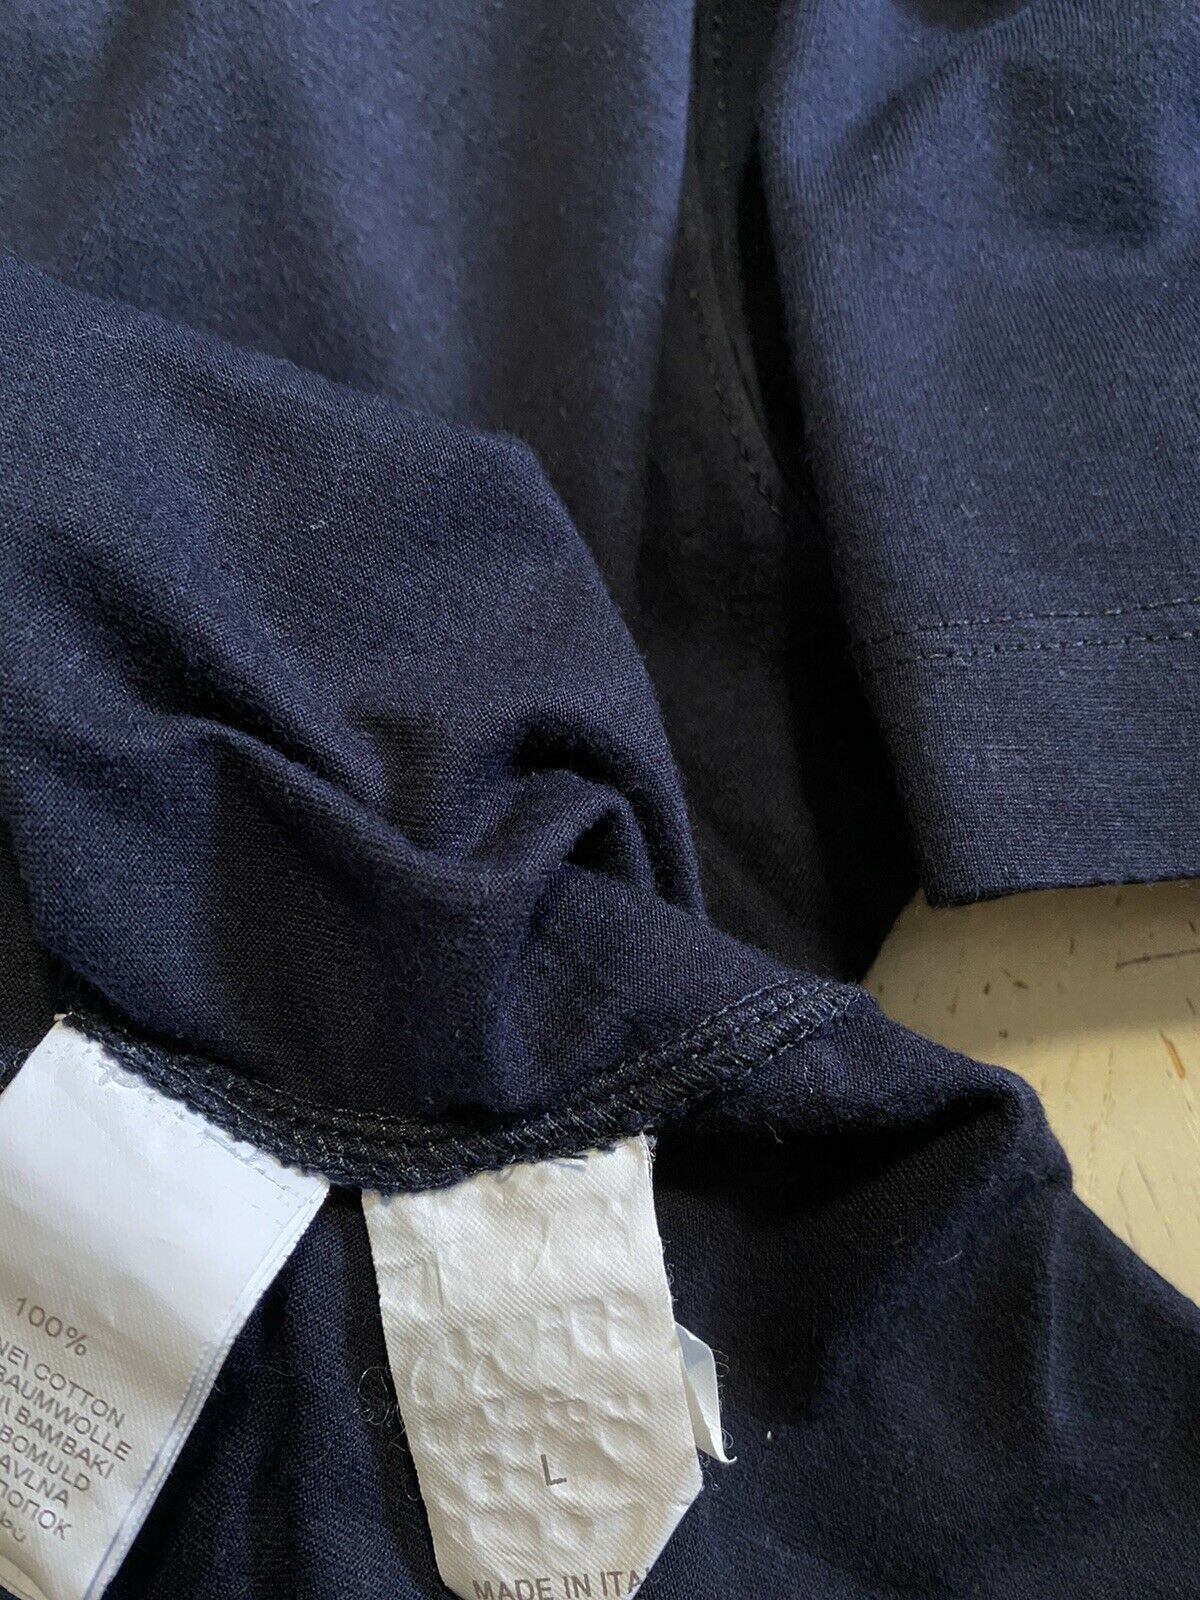 Мужская футболка узкого кроя темно-синего цвета Brunello Cucinelli, размер L, Италия, $595